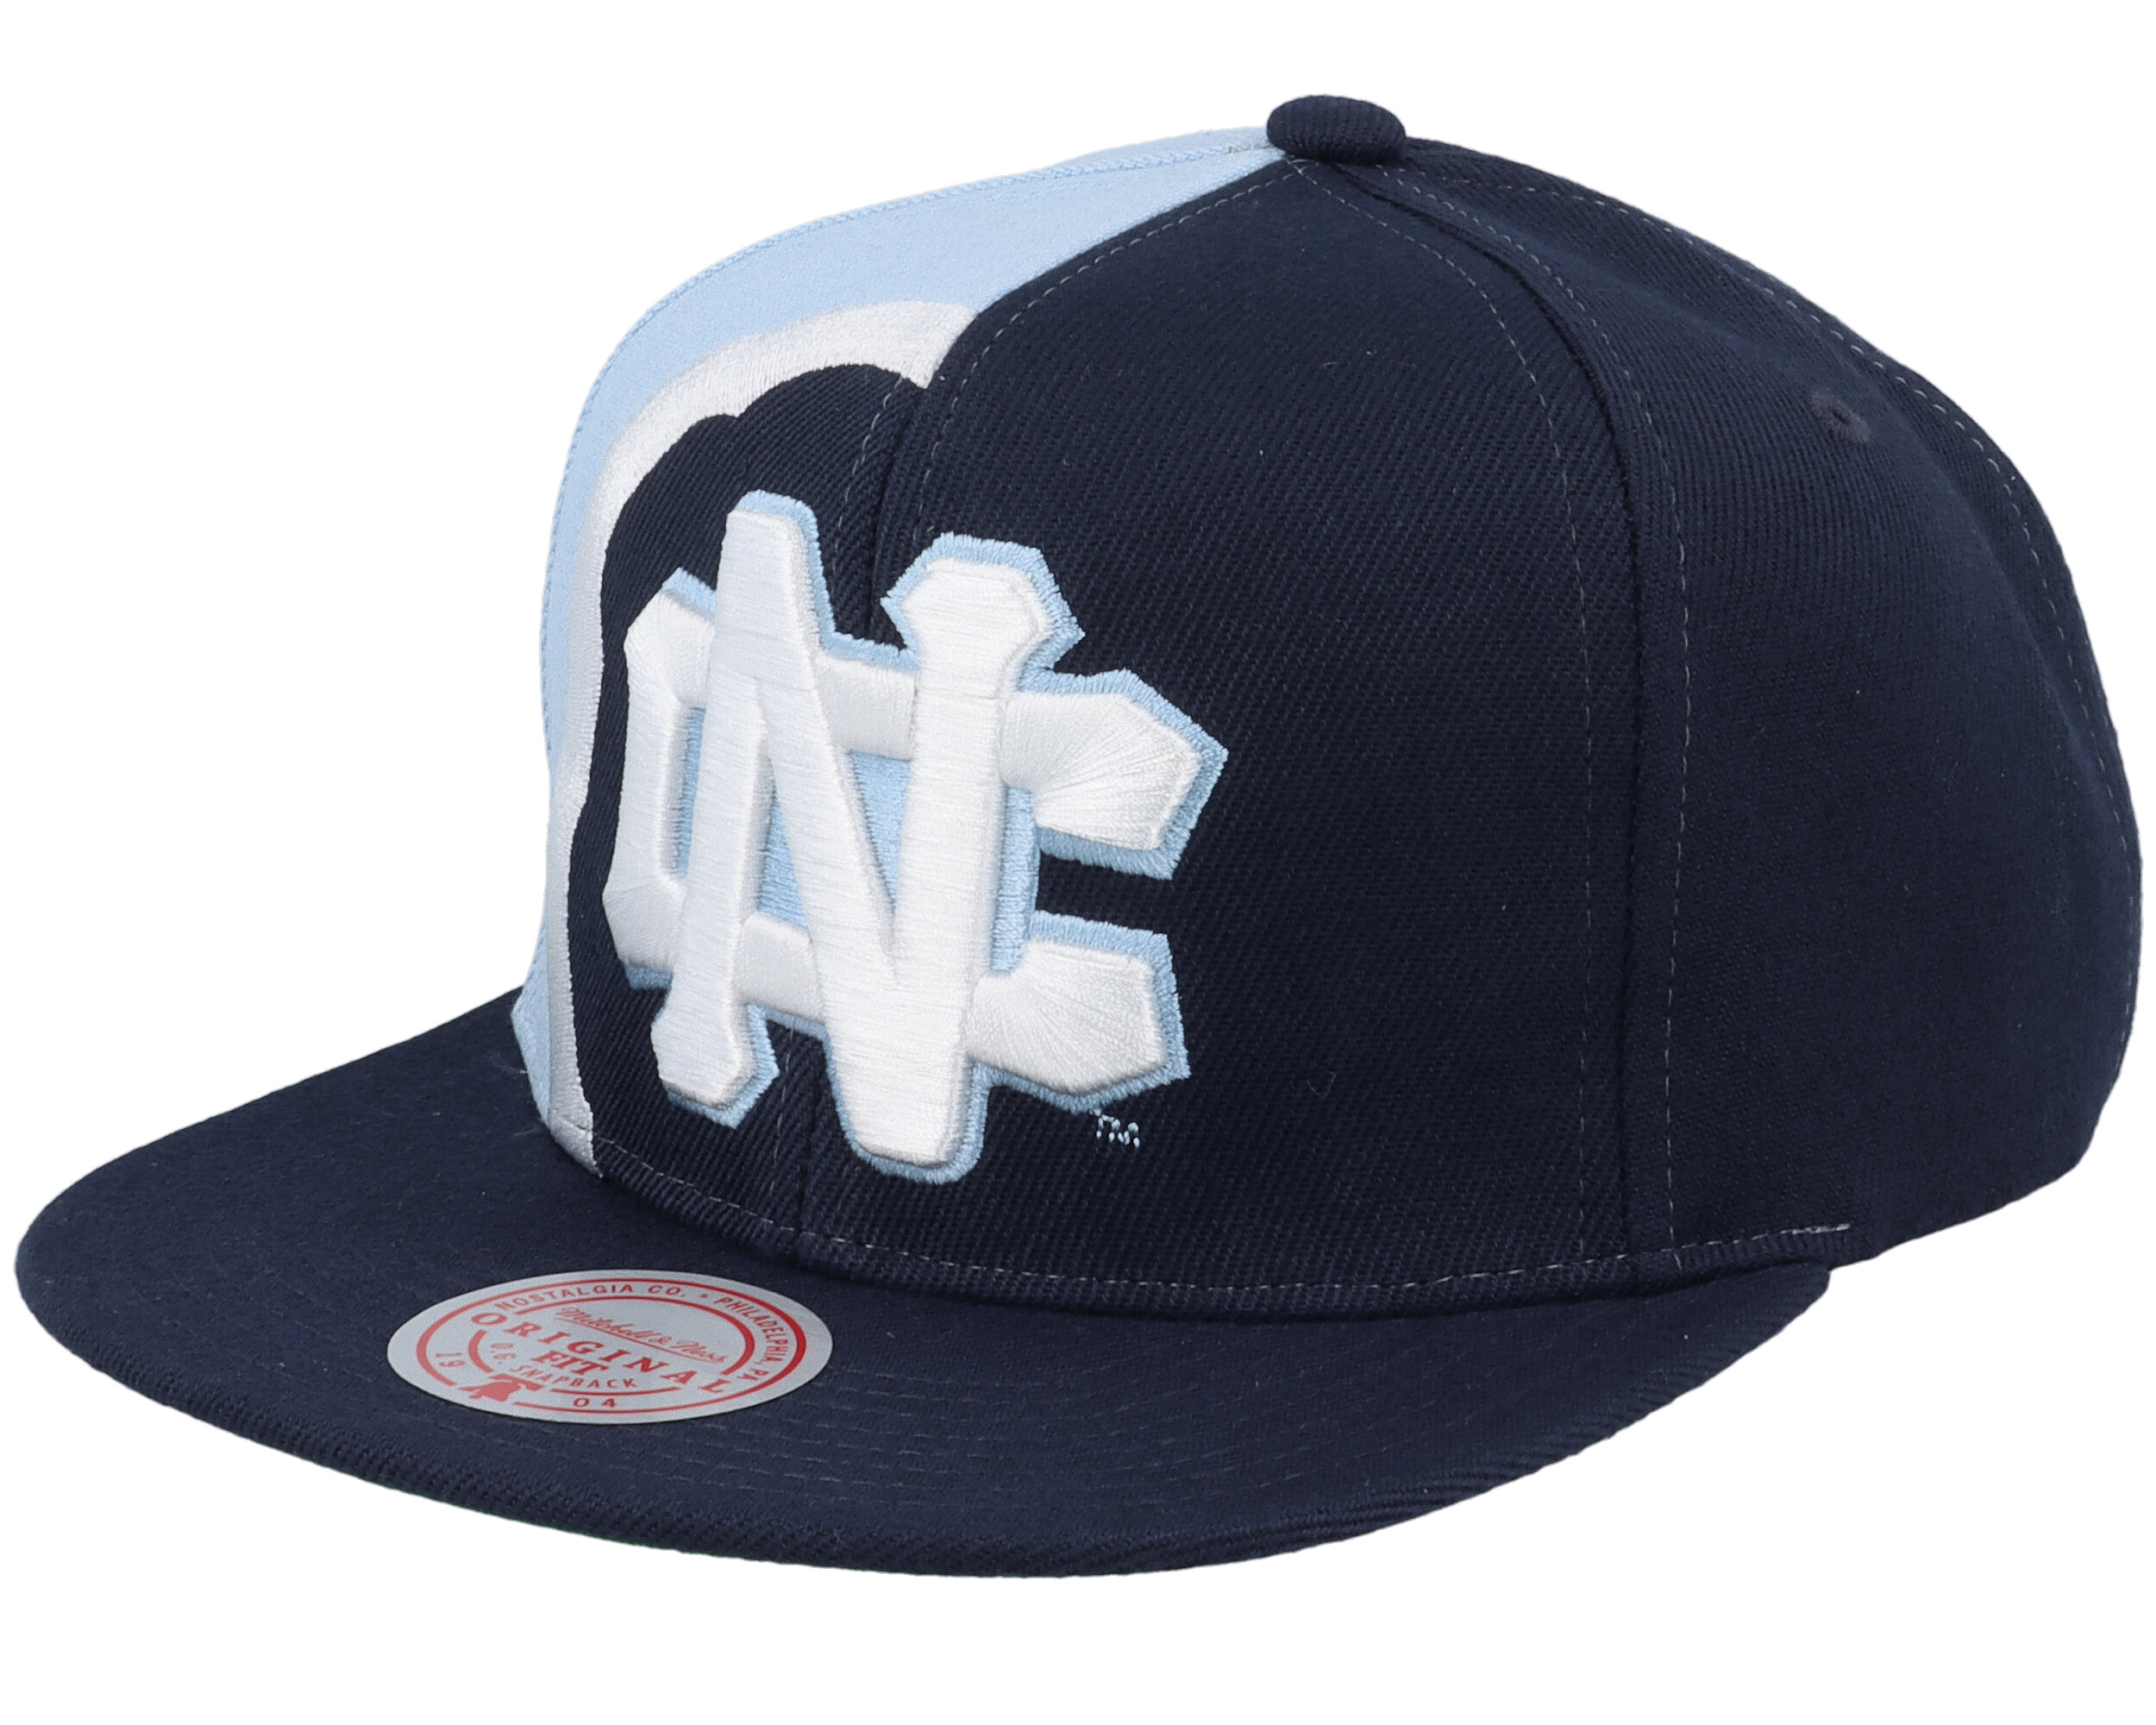 New Era New York Mets "Yankee Hater" Snapback Hat Cap All NAVY/White 